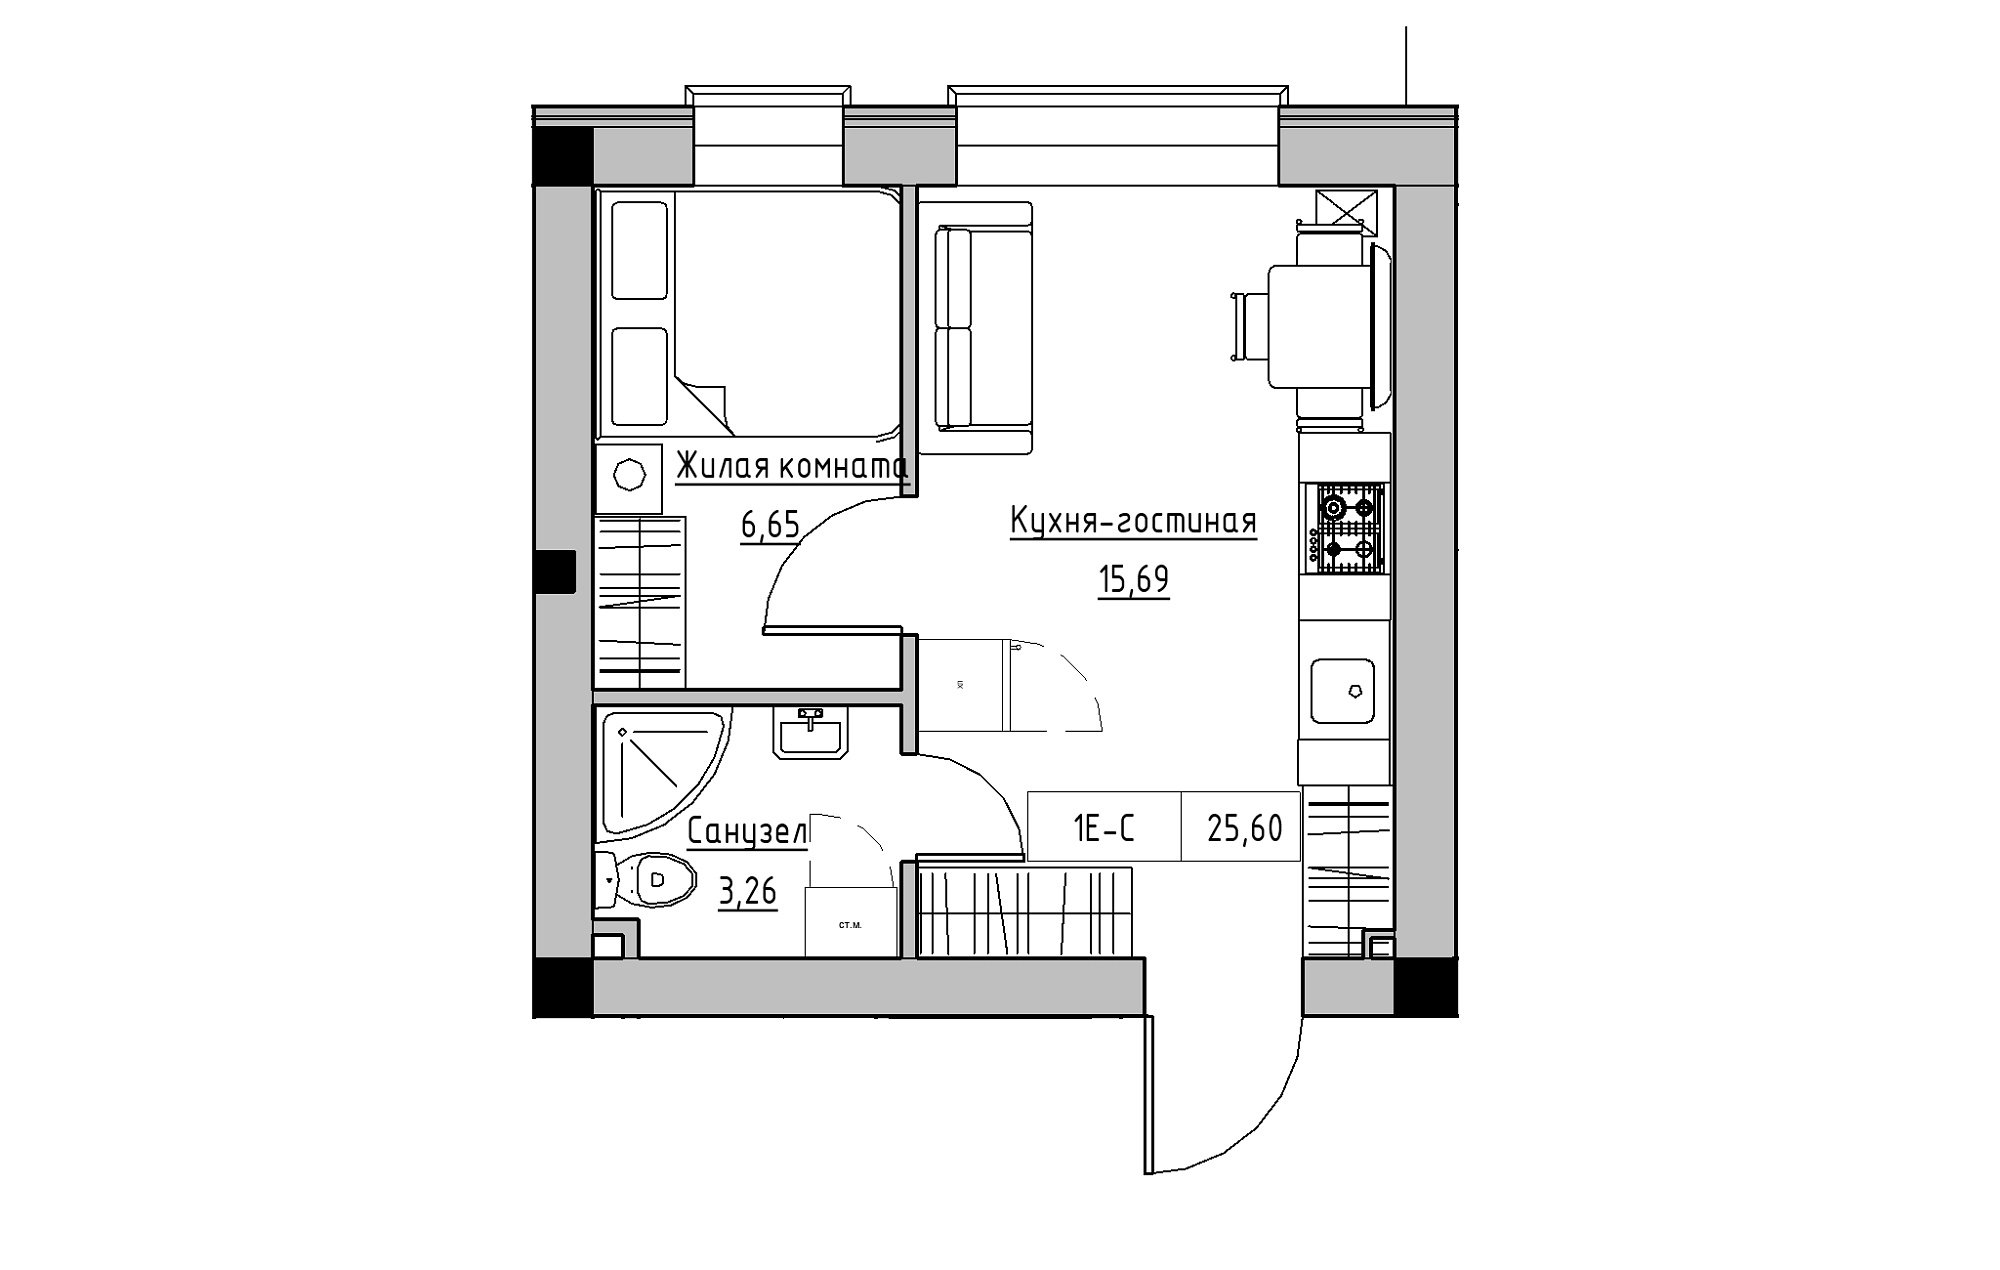 Planning 1-rm flats area 25.6m2, KS-018-05/0004.